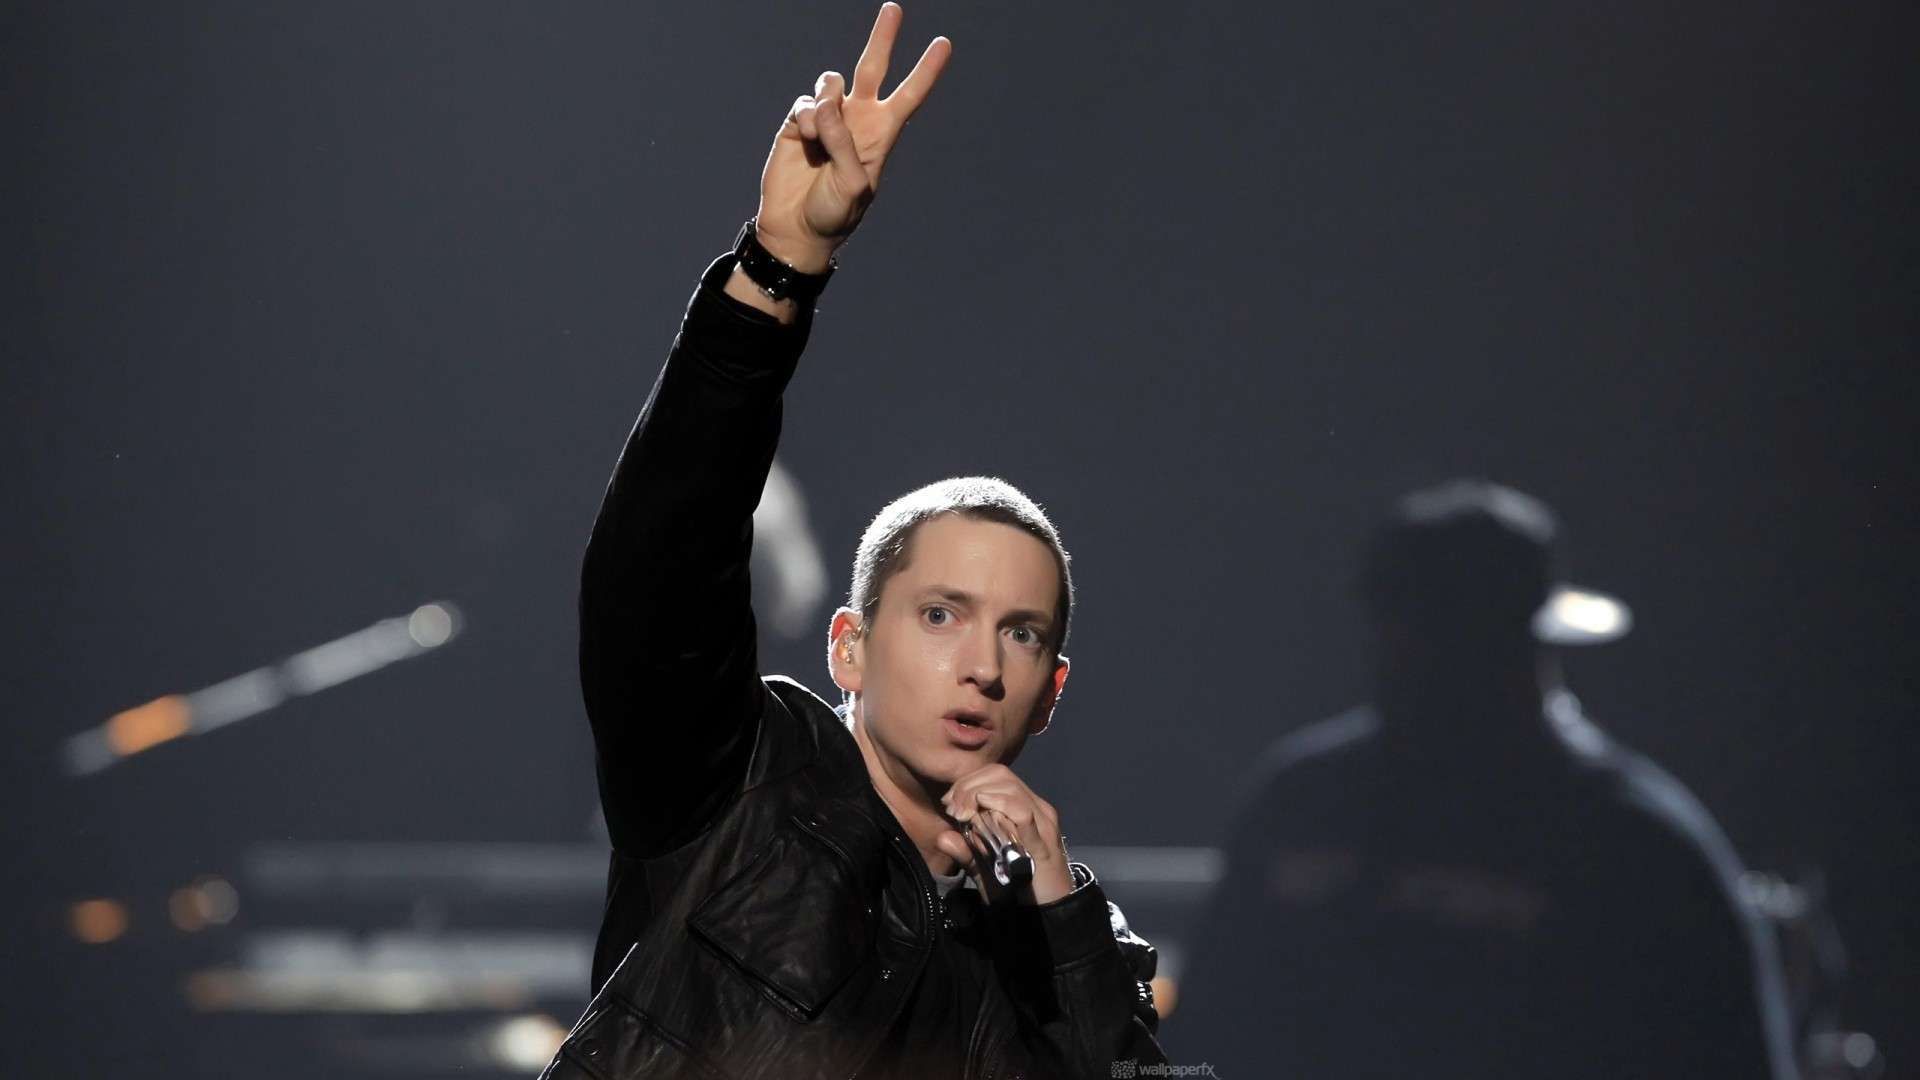 Now Eminem Singing HD Wallpaper 1080p Read Description